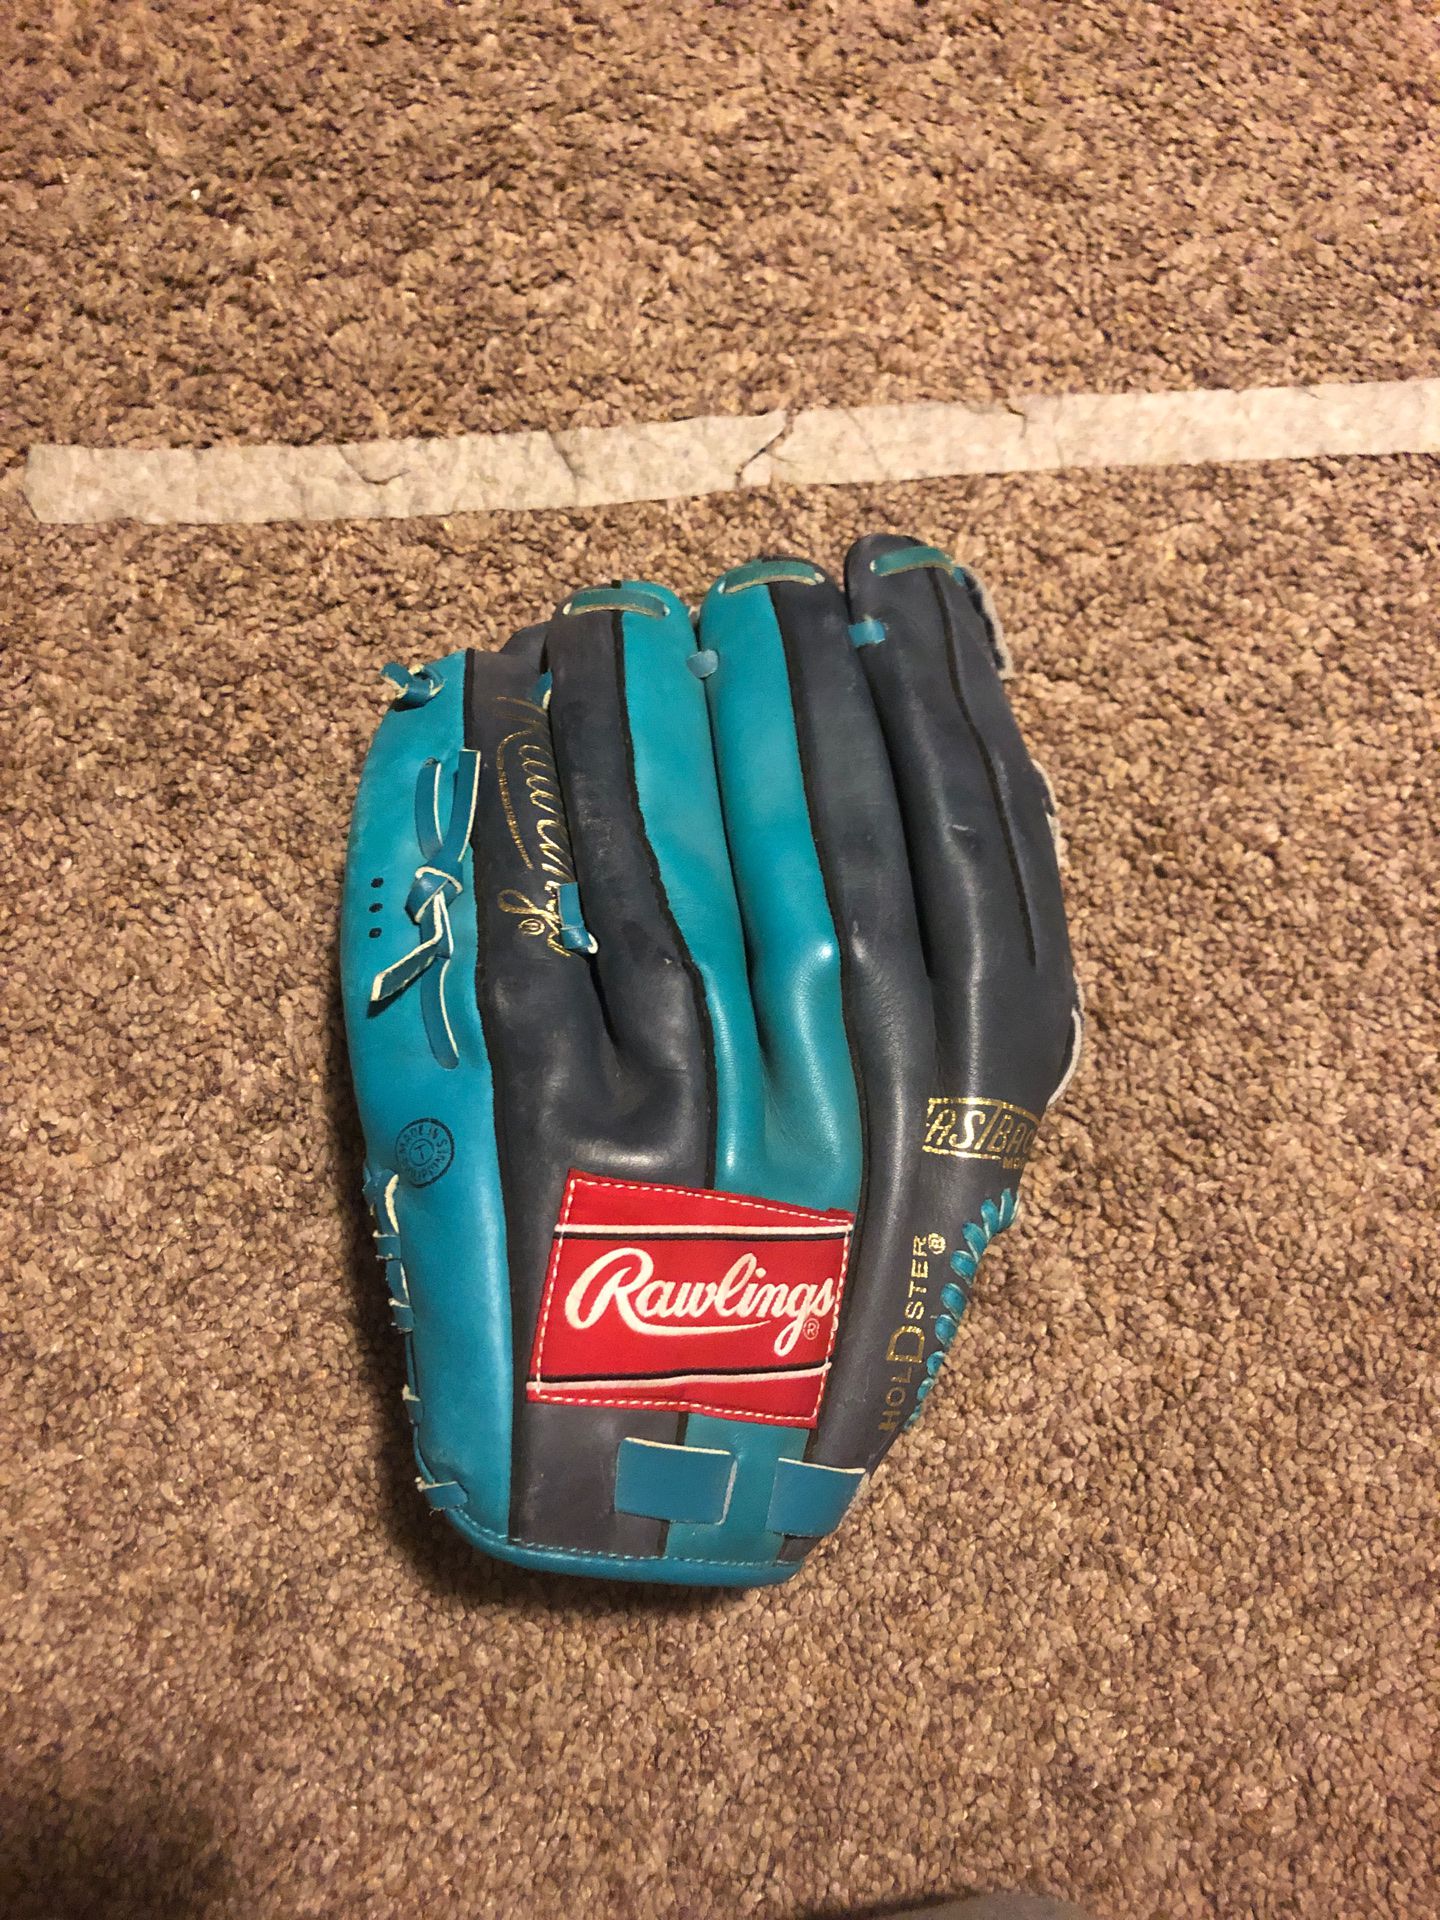 Rawlings perfect condition 12 1/2” leather baseball/softball glove